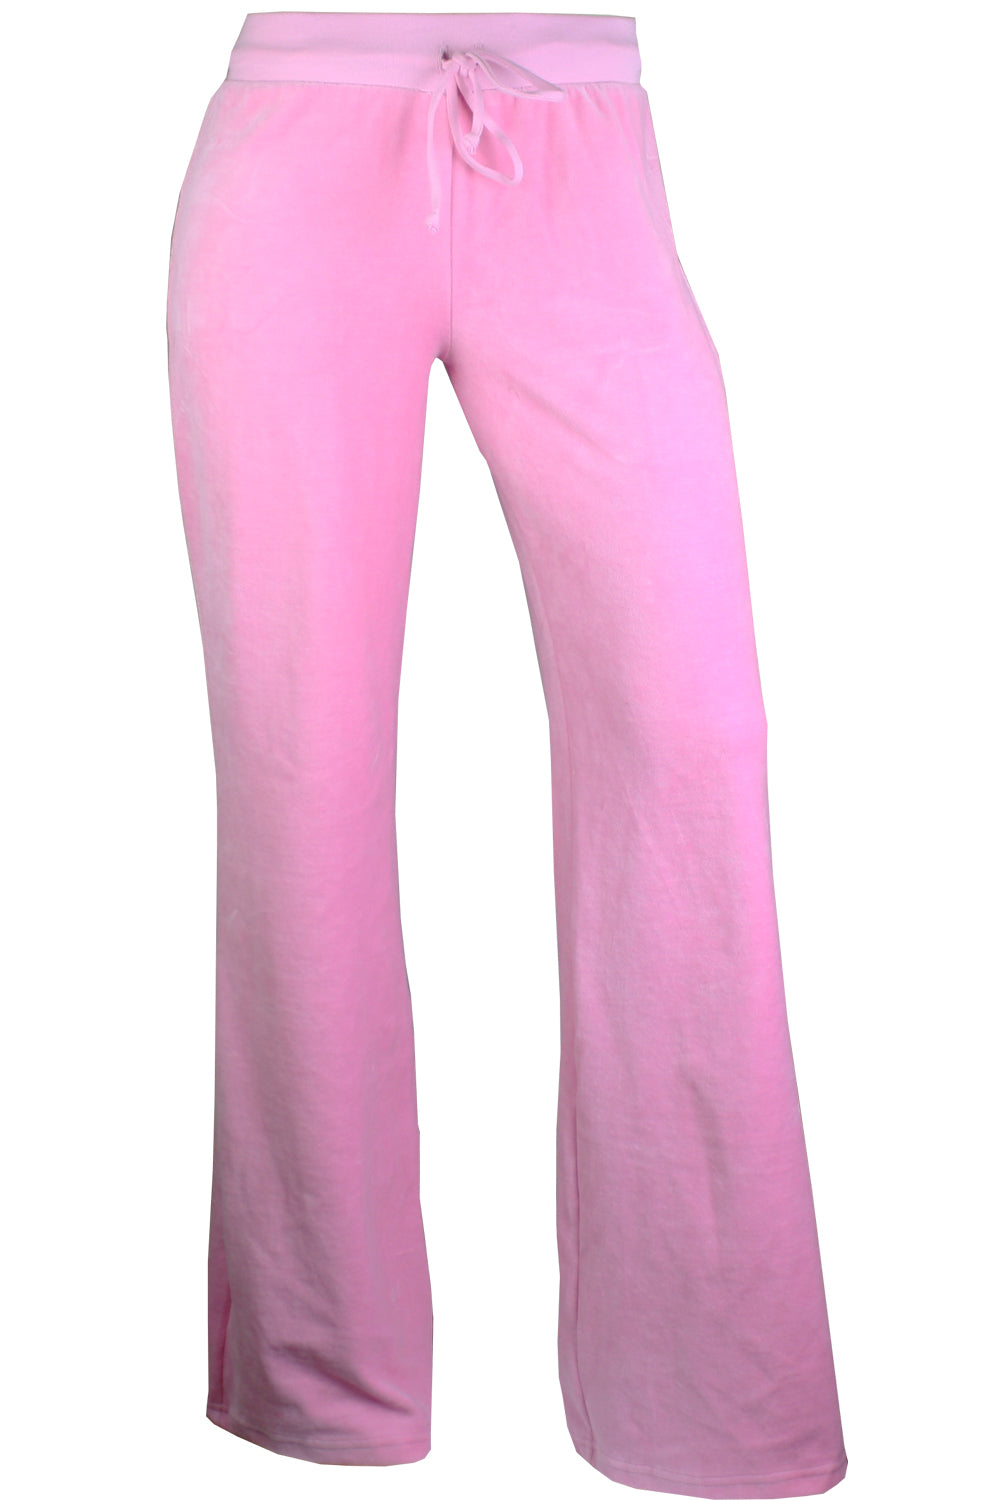 Womens Baby Pink Velour Pants, Sweatpants